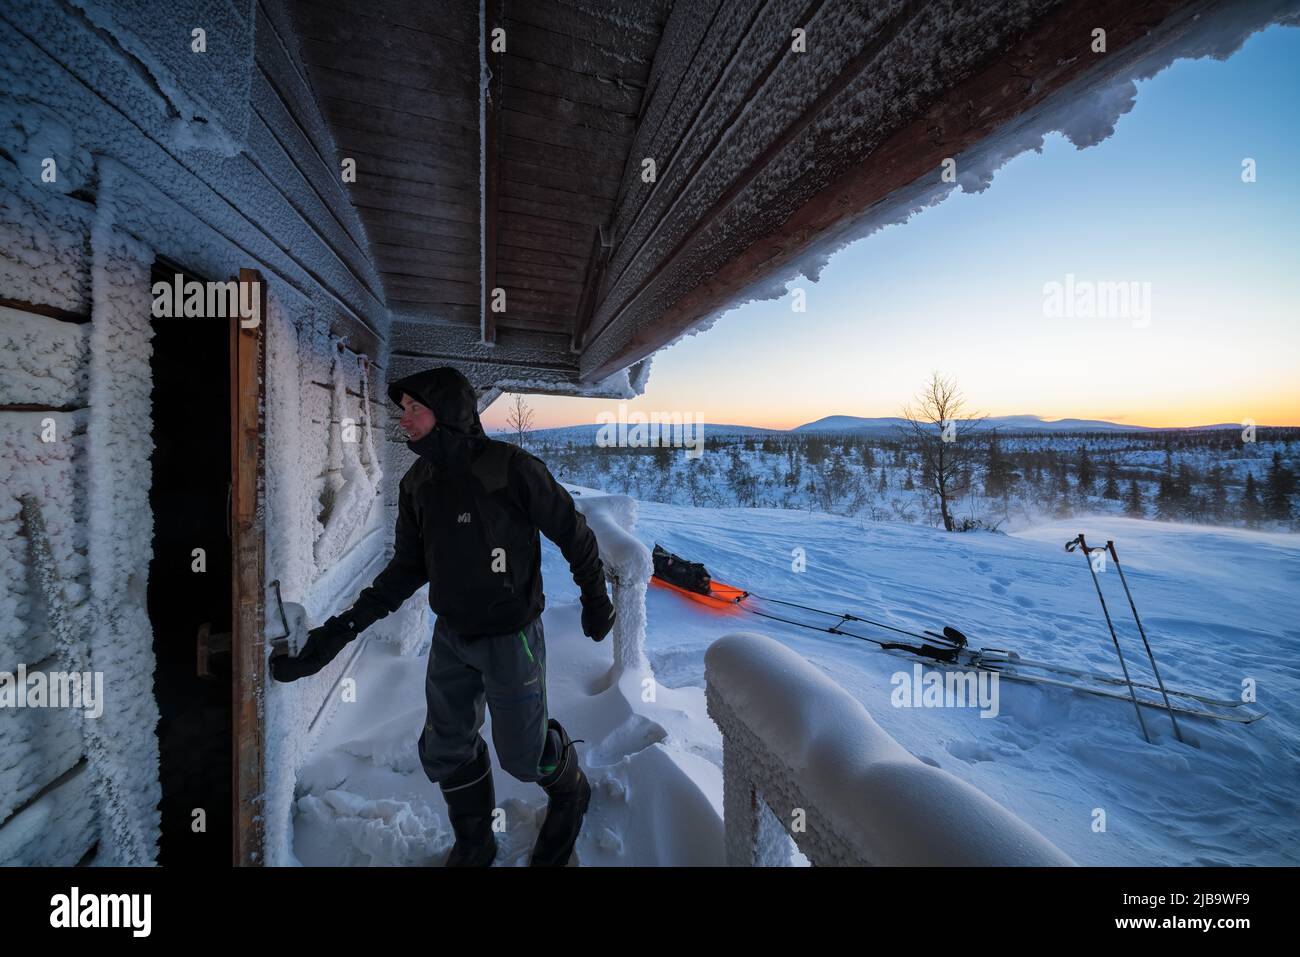 A Pahakuru capanna selvaggia aperta, Enontekiö, Lapponia, Finlandia Foto Stock